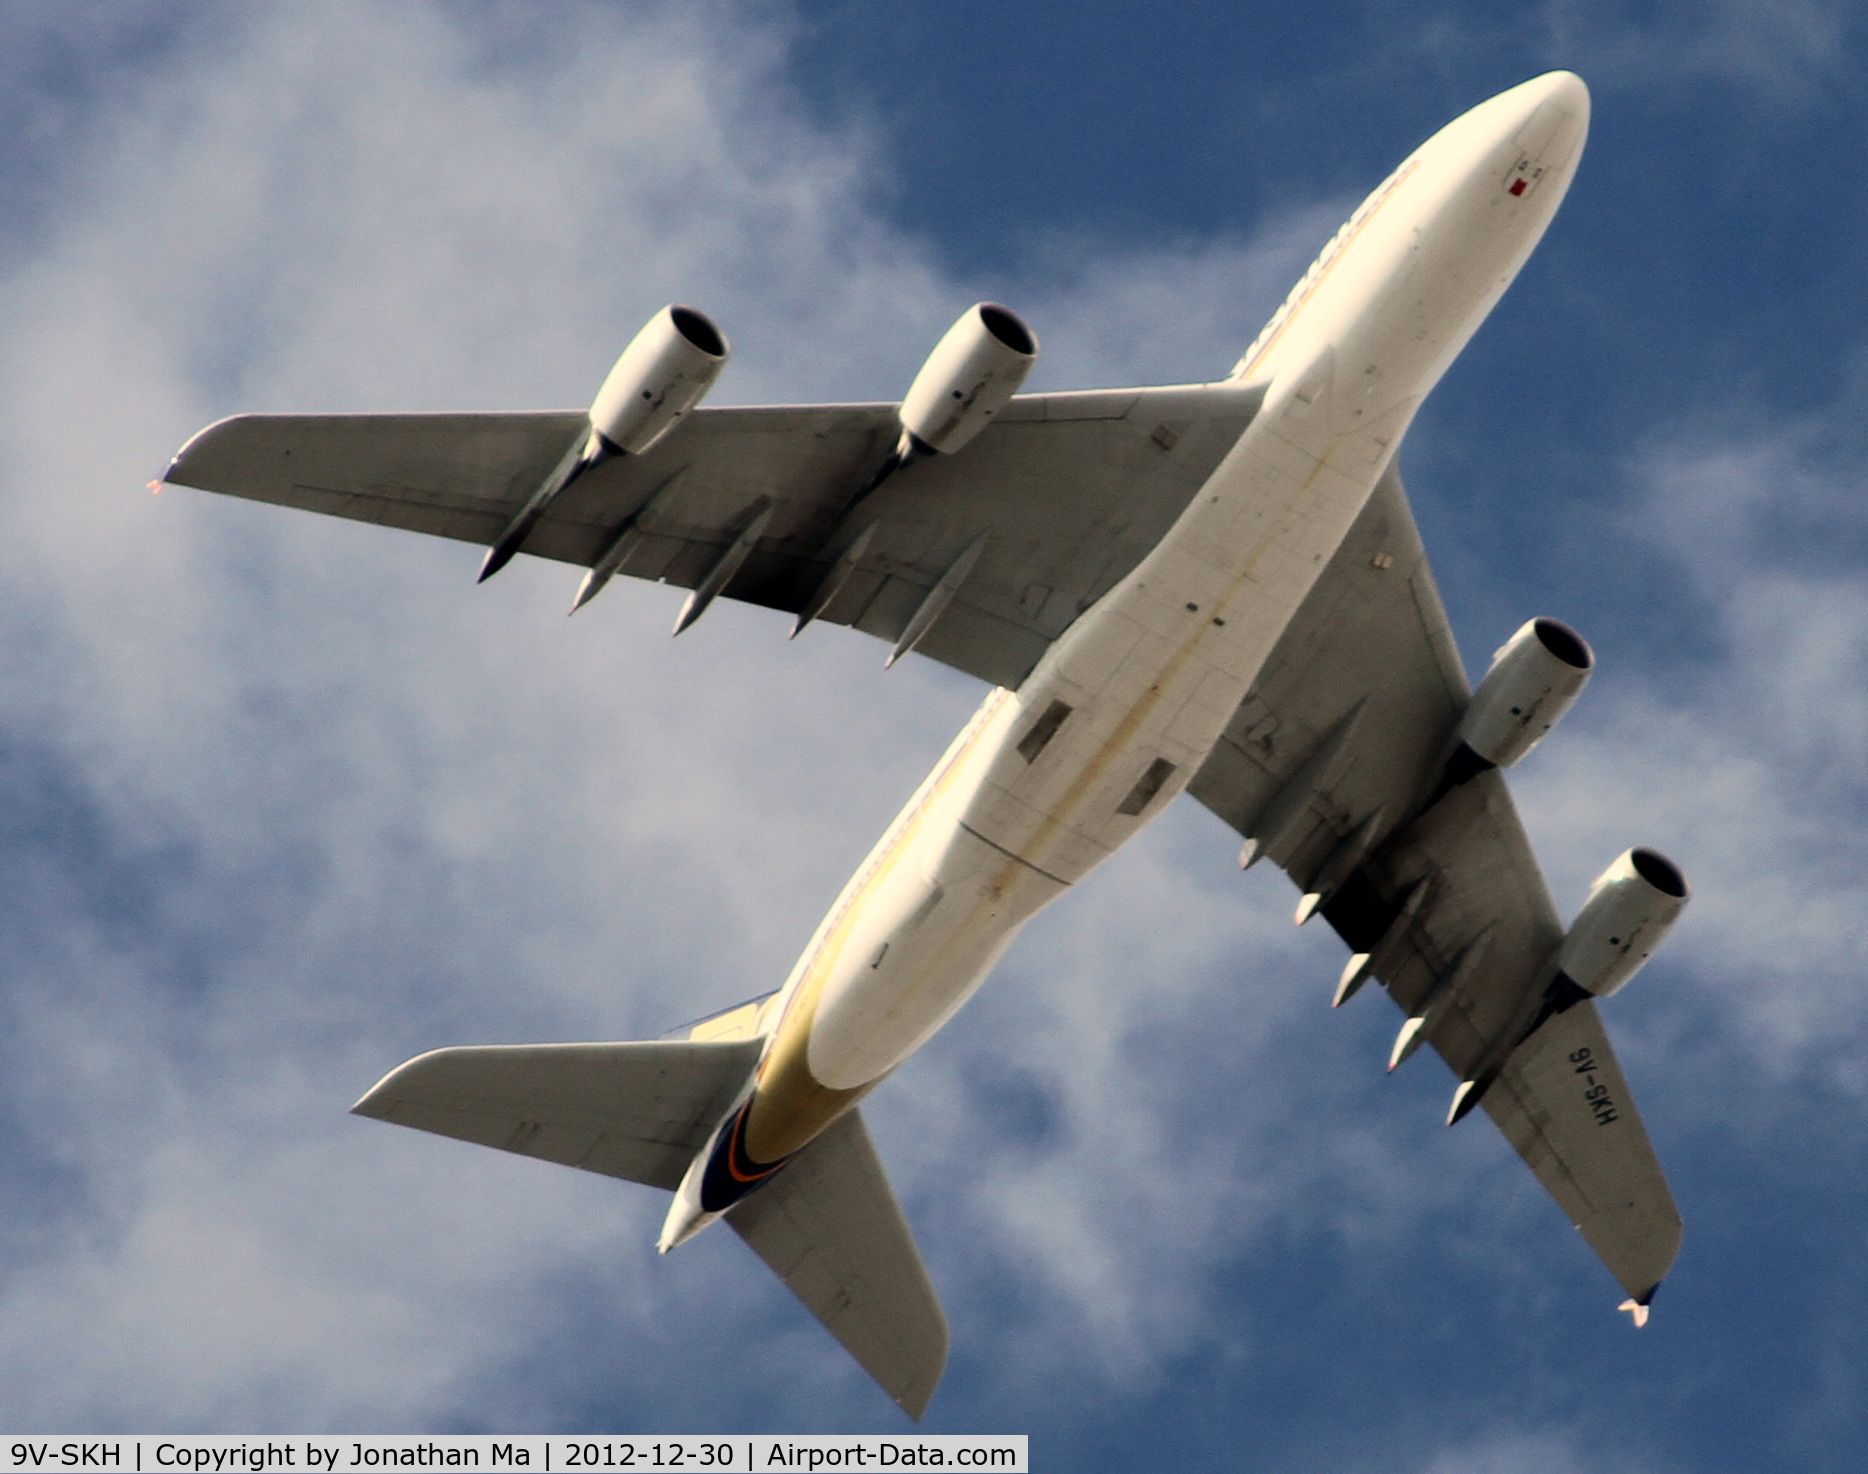 9V-SKH, 2008 Airbus A380-841 C/N 021, Flying over California Science Center, inbound for landing on 24L